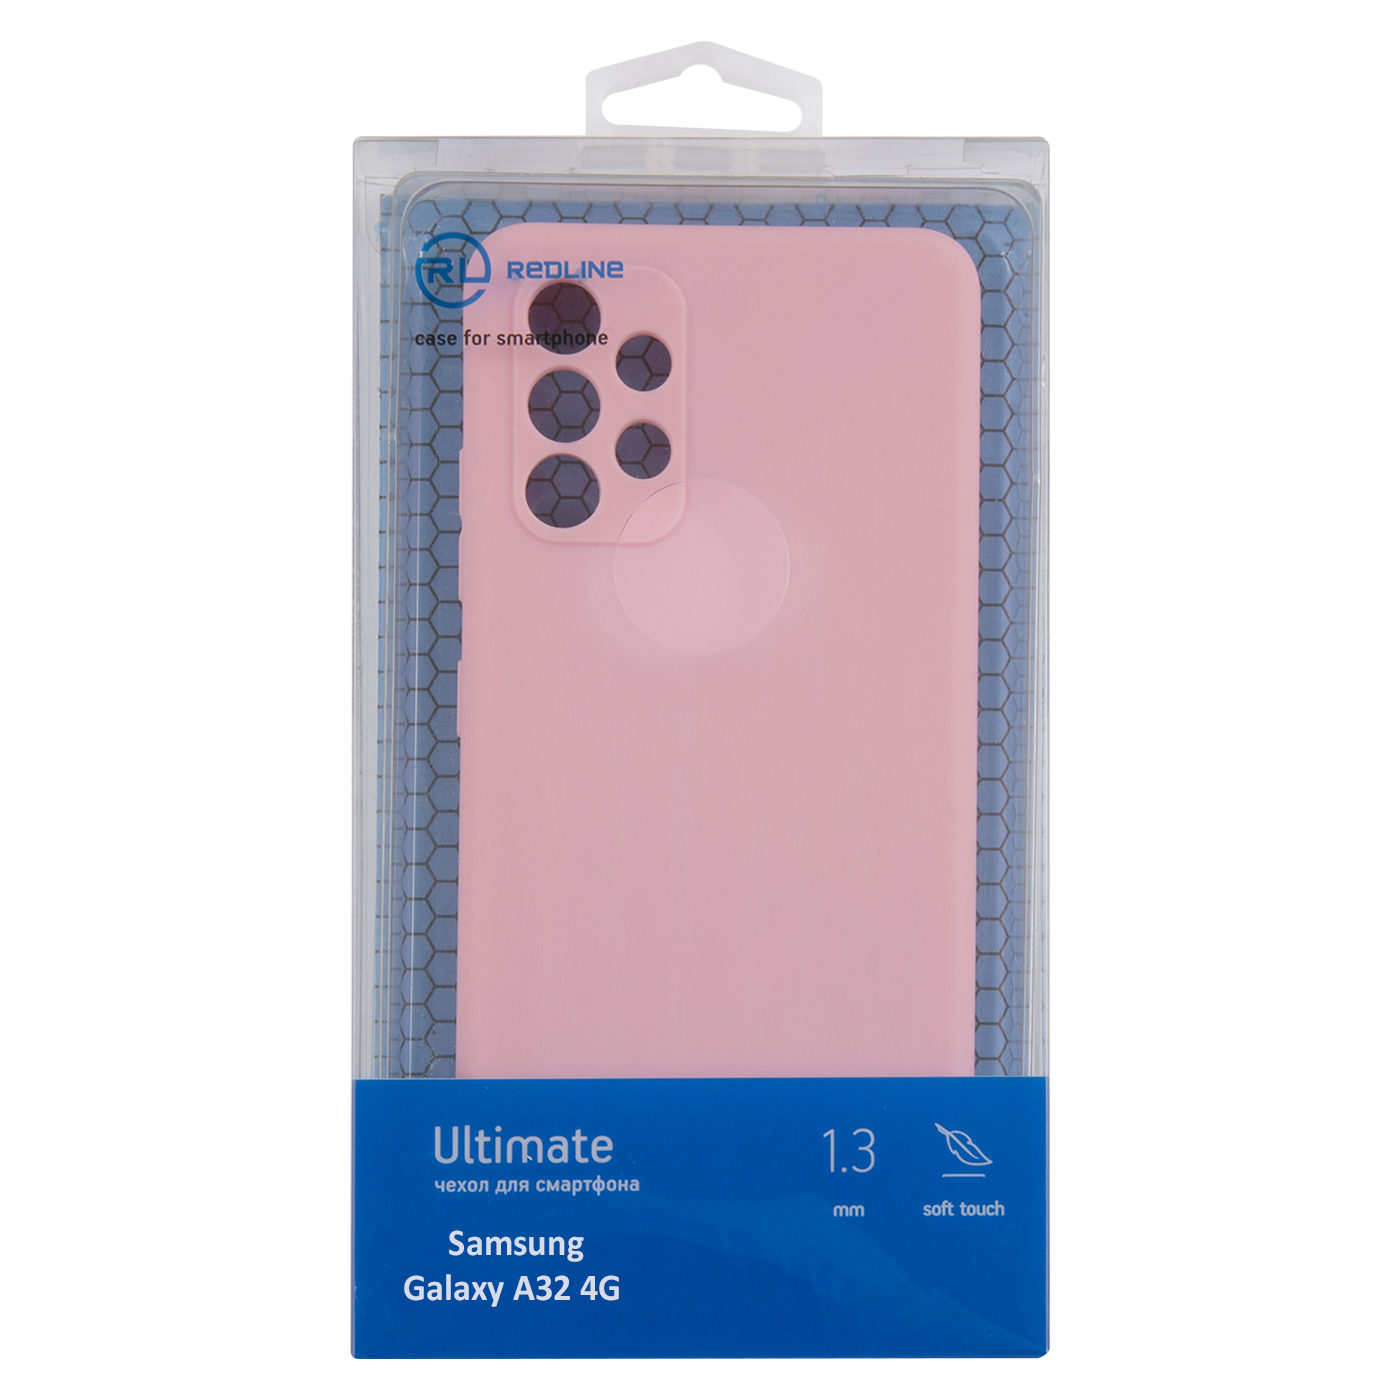 Чехол защитный Red Line Ultimate для Samsung Galaxy A32 4G, розовый УТ000024008 чехол red line для samsung galaxy a32 4g ultimate light blue ут000024003